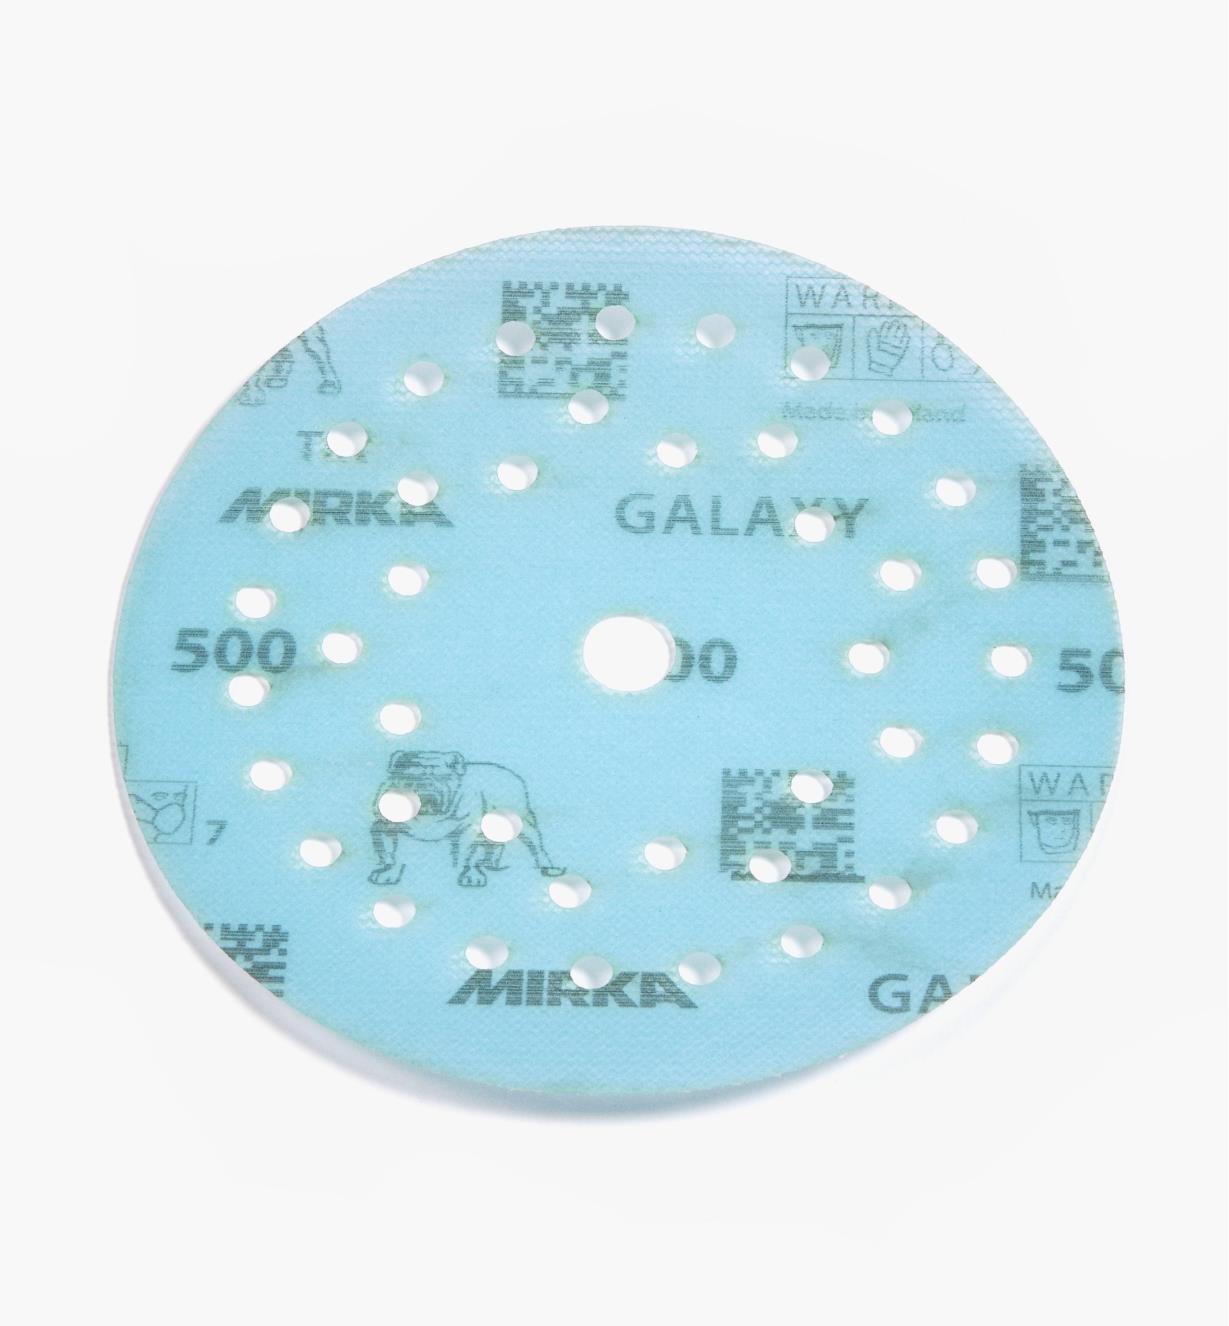 08K1351 - 500x Mirka 5" Galaxy Multifit Grip Disc, ea.